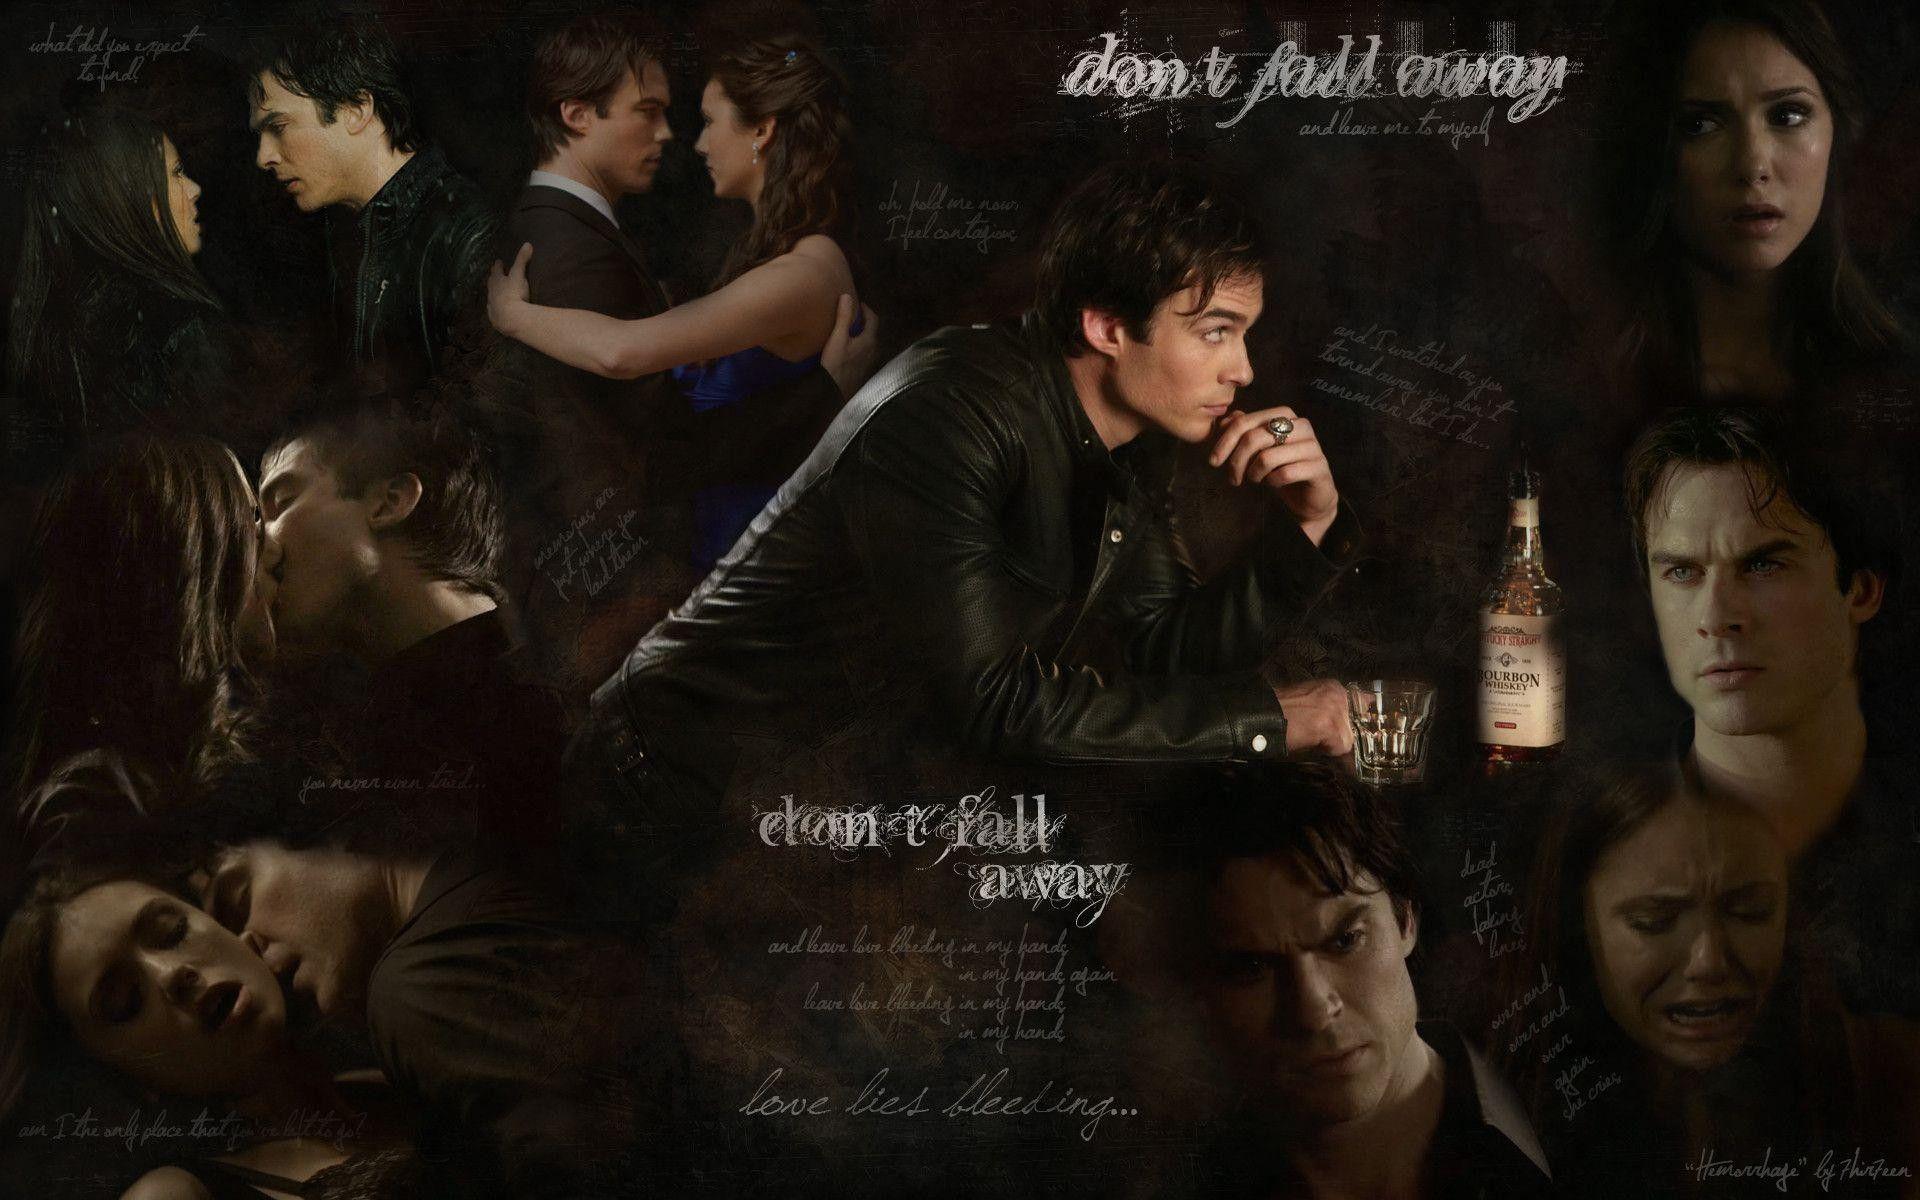 Vampire Diaries Wallpaper Damon and Elena